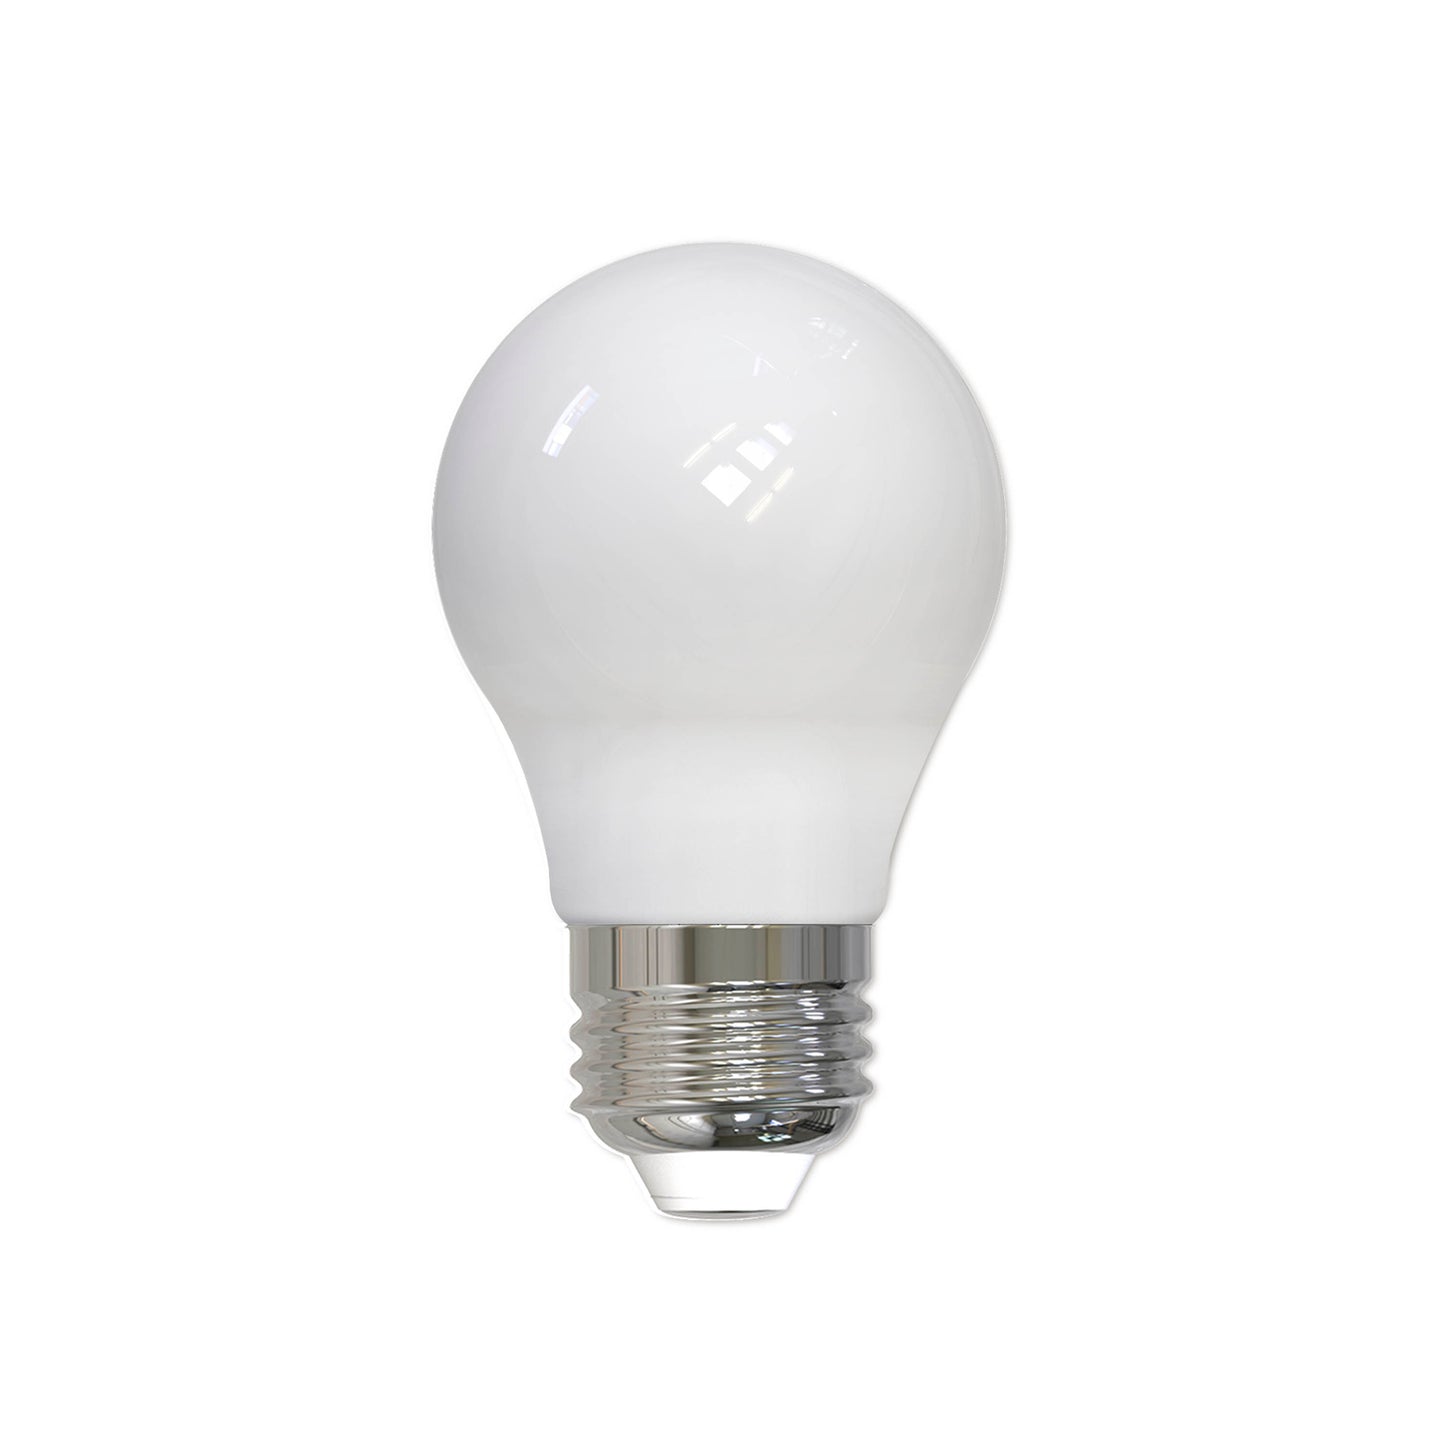 776642 - Filaments Dimmable Milky Glass A15 LED Light Bulb - 7 Watt - 3000K - 4 Pack